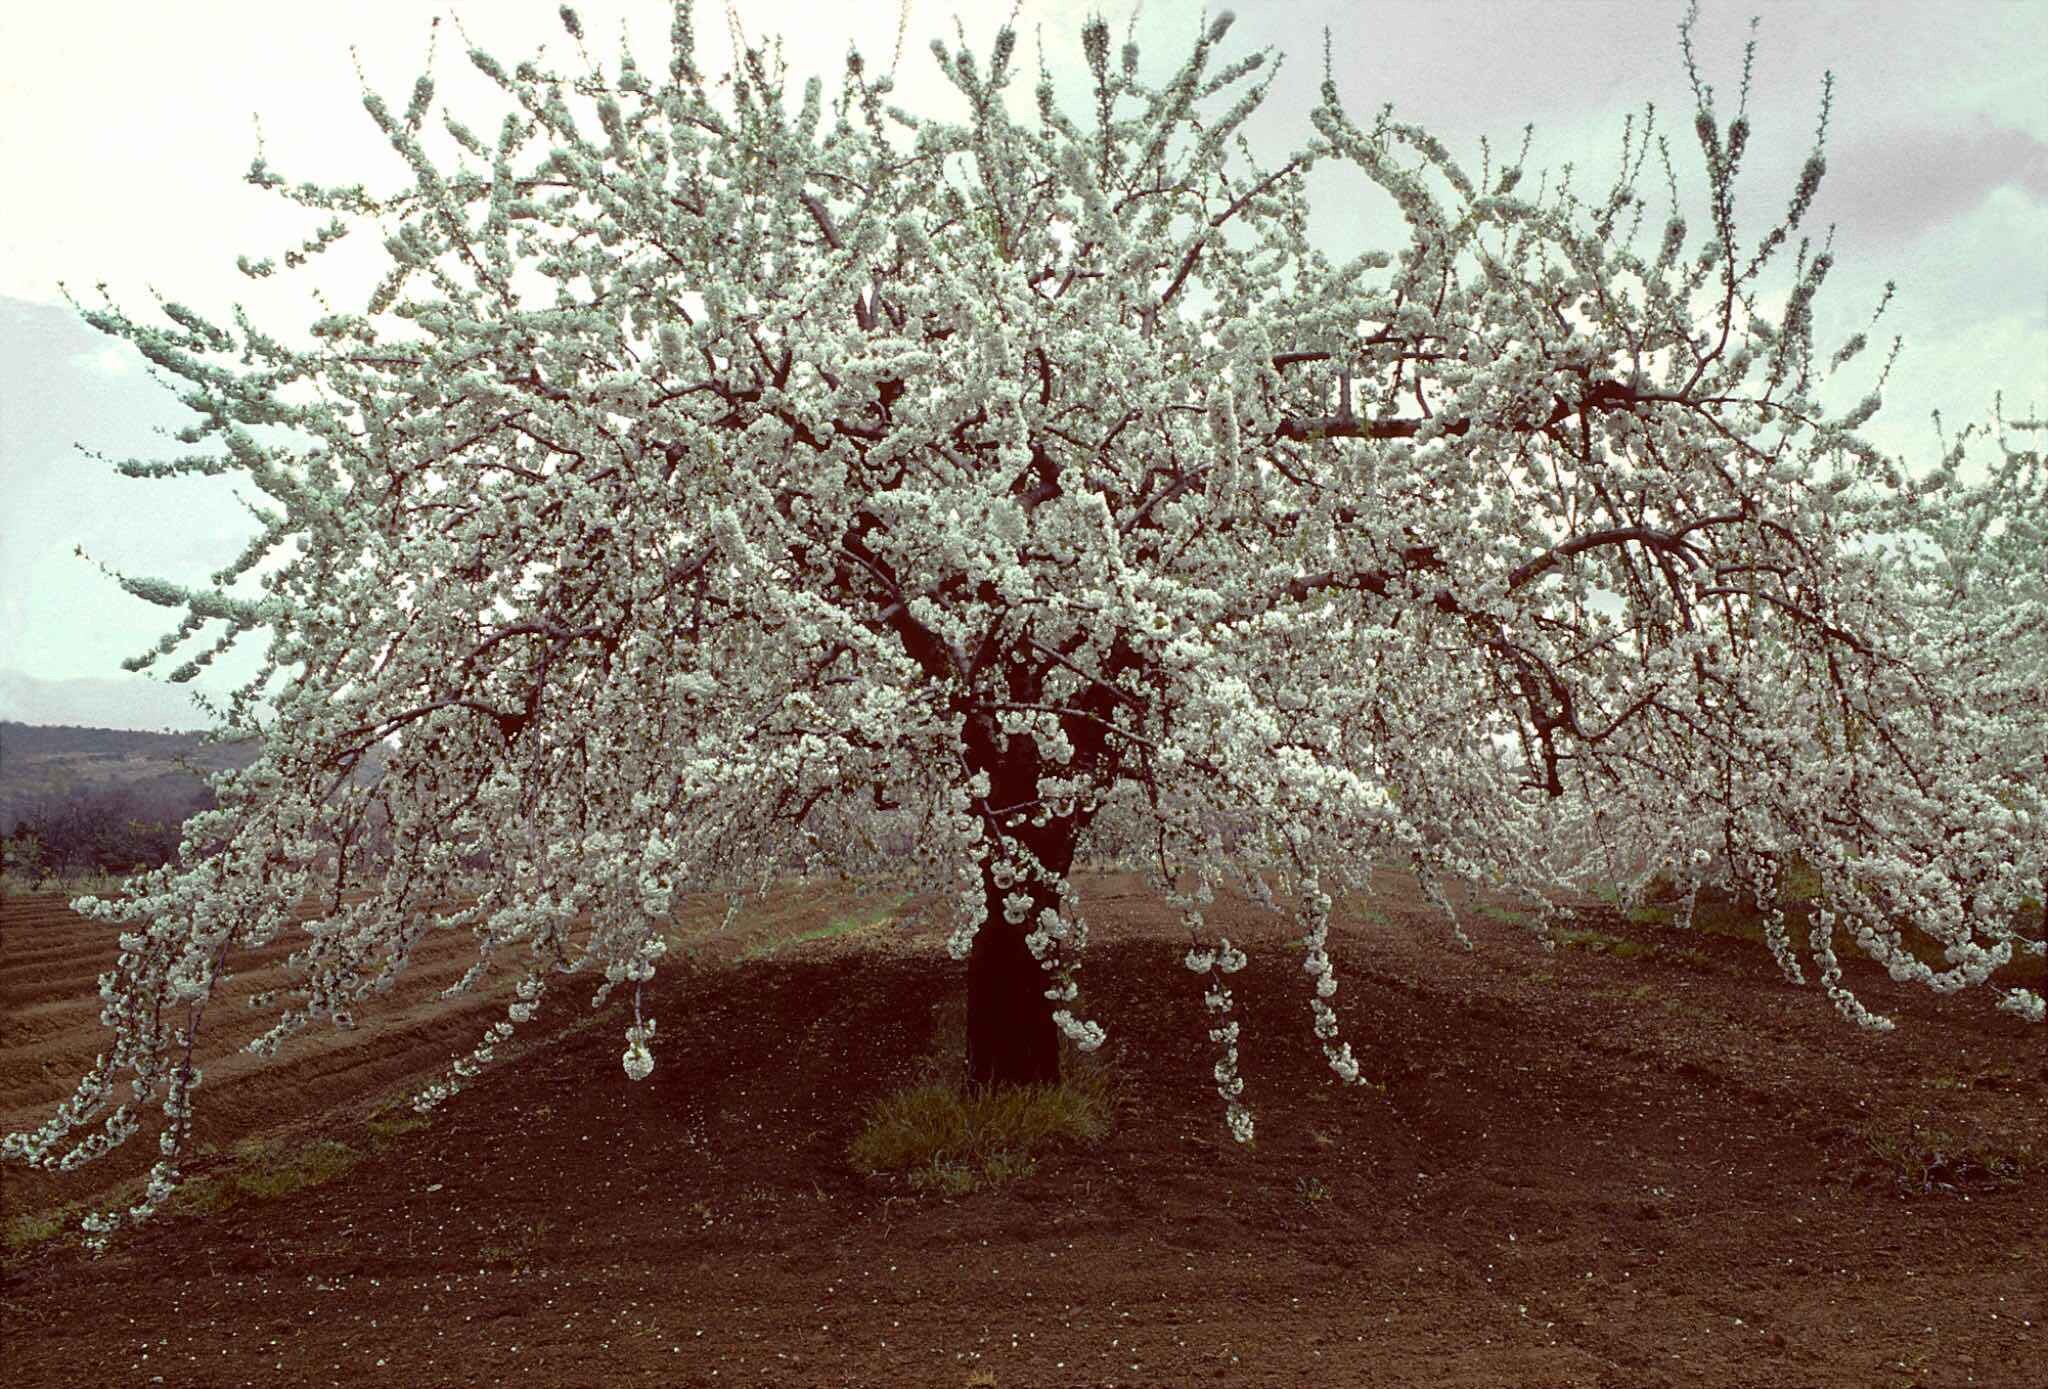 1976, Ардеш, Франция, вишневое дерево в цвету (вариация), фотограф Франк Хорват